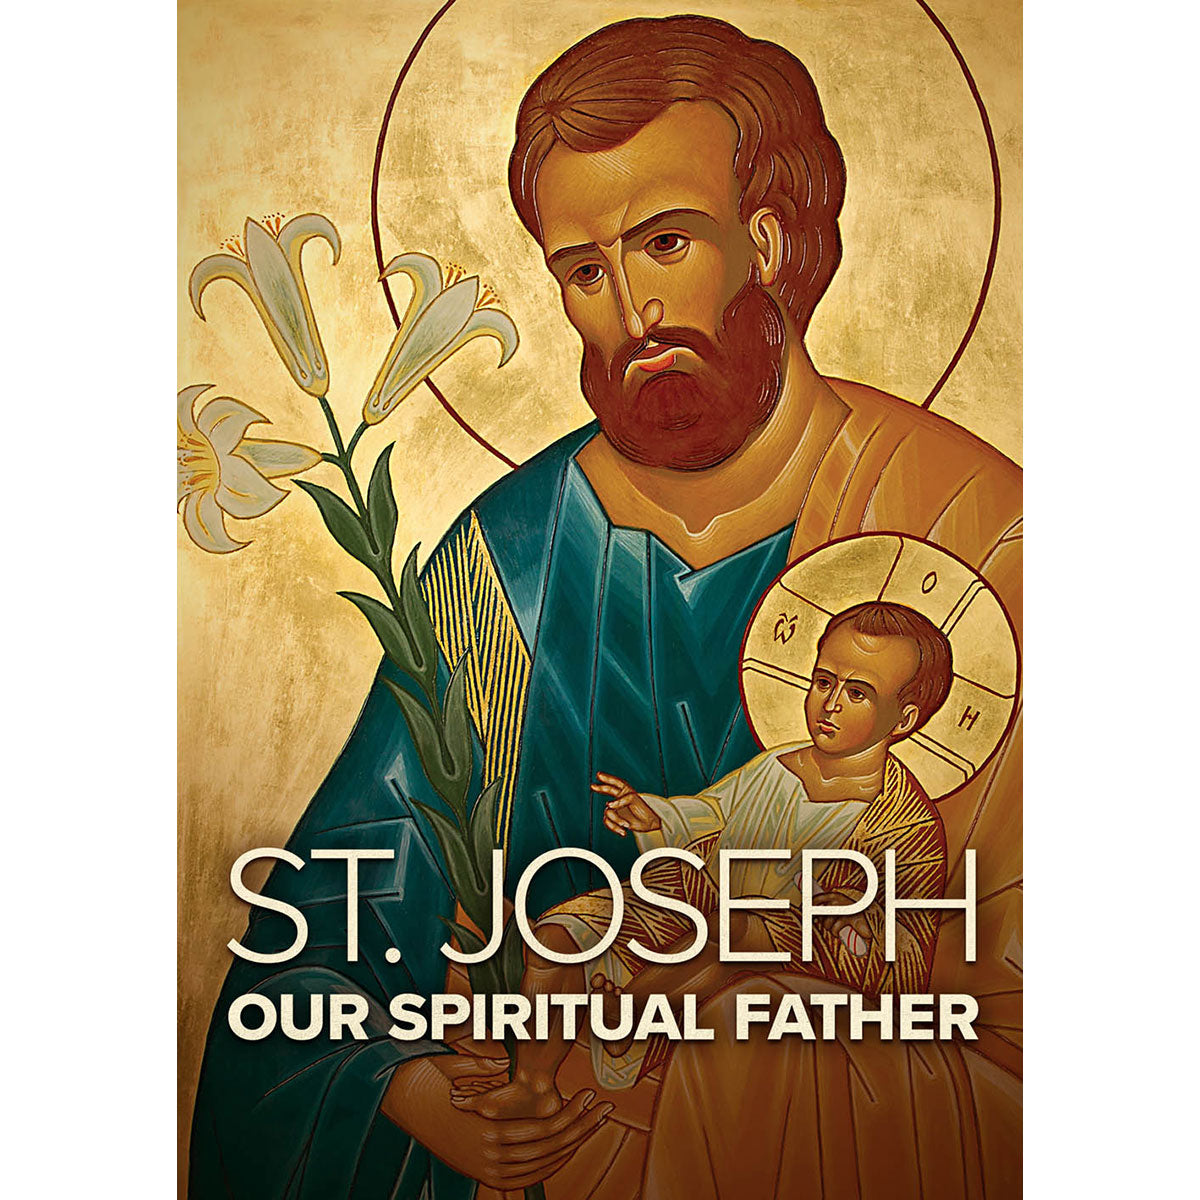 St. Joseph: Our Spiritual Father DVD